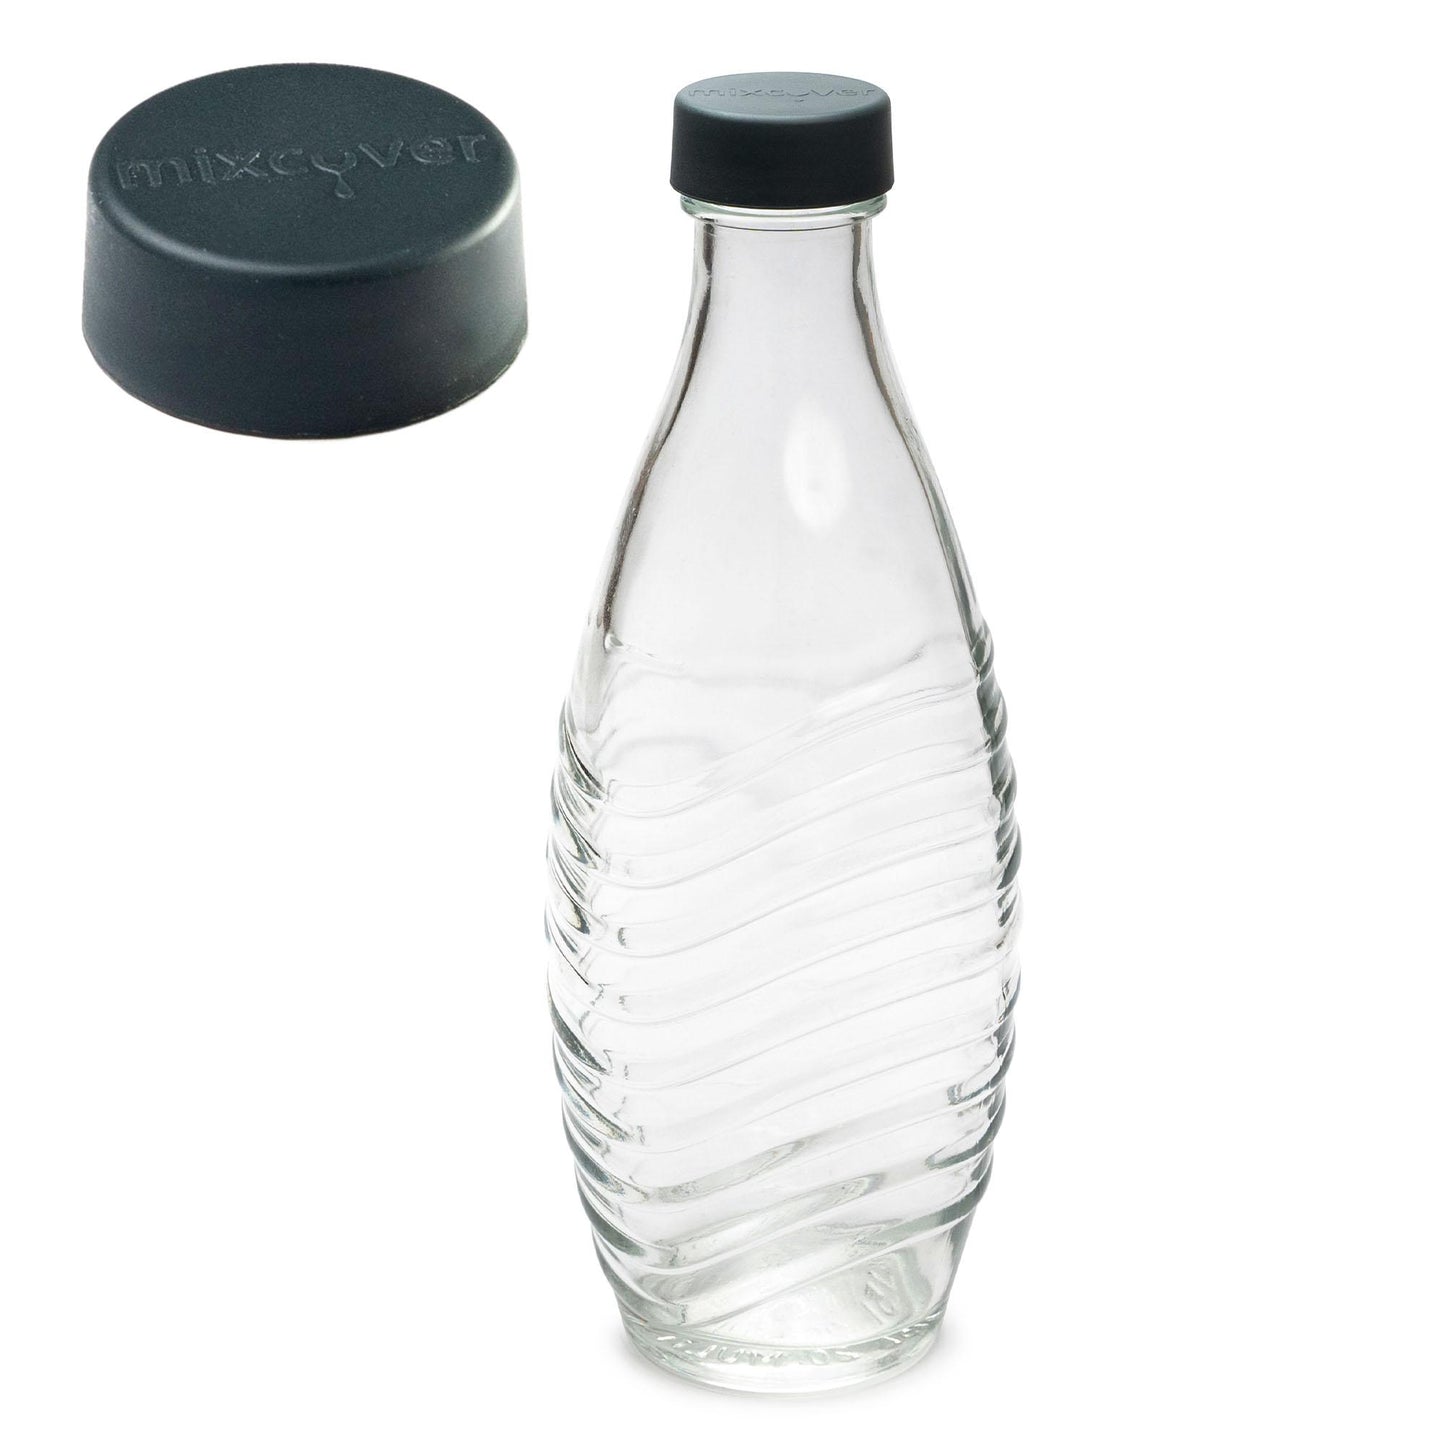 B-GOODS: Tapa de reemplazo adecuada para SodaStream Crystal & Penguin Glass Bottle 1 Set